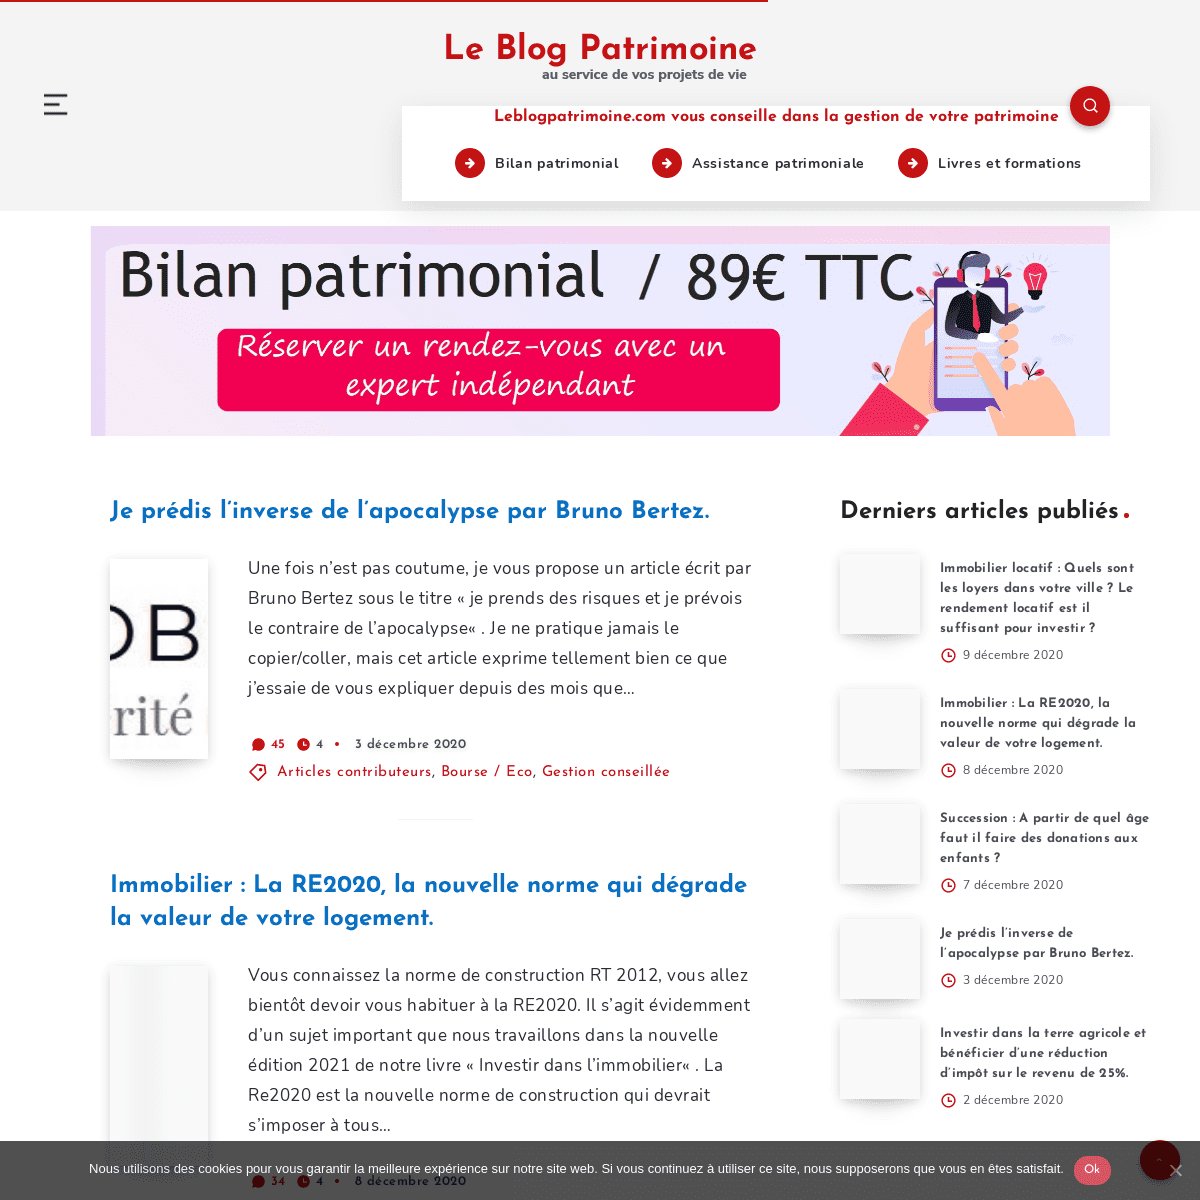 A complete backup of leblogpatrimoine.com